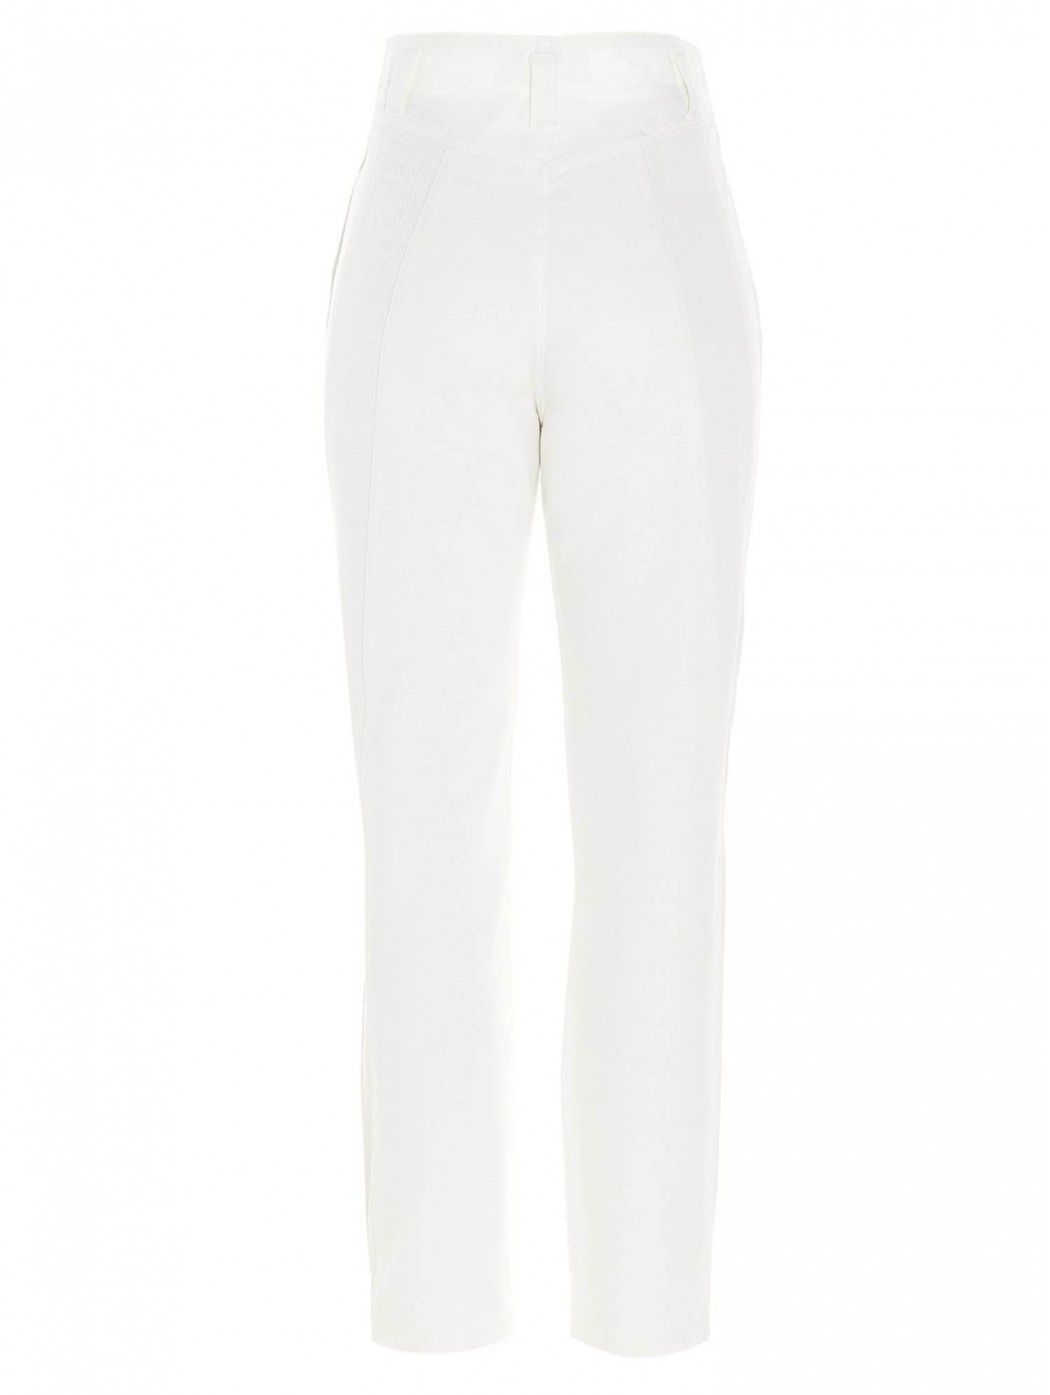 Cotton jeans White color Contrasting stitching detail Zip and button closure  ALBERTA FERRETTI